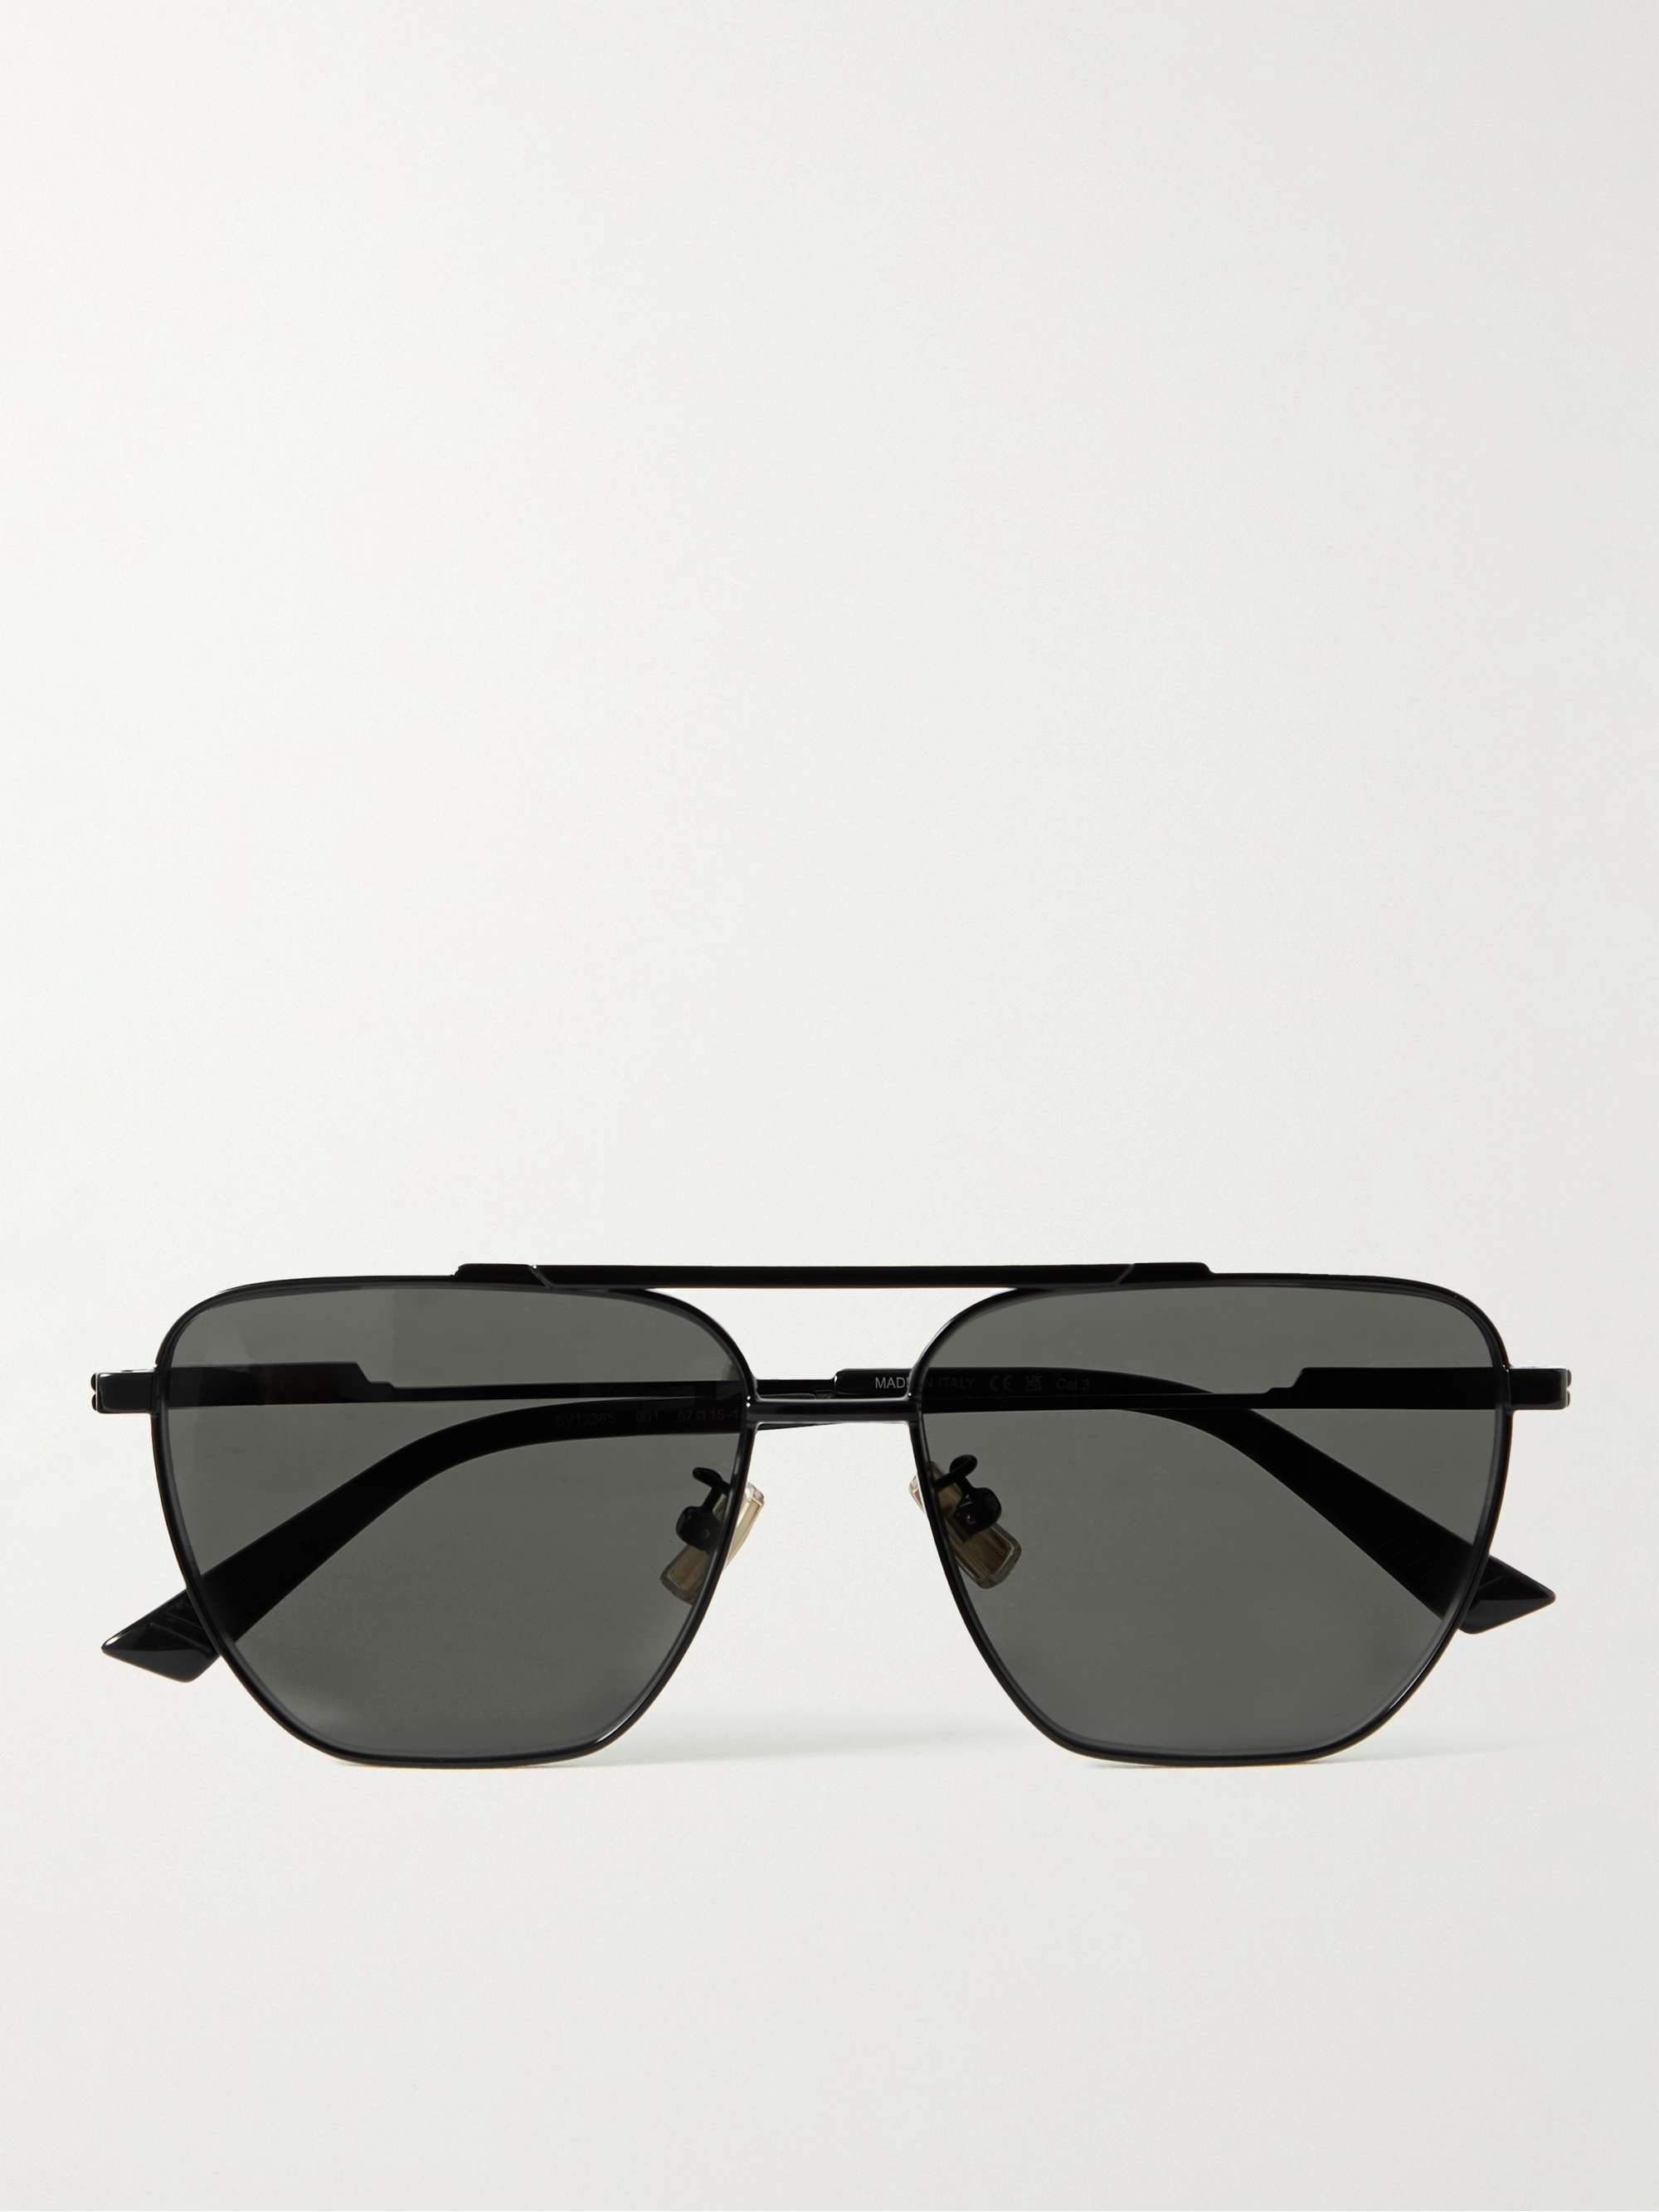 Bottega Veneta SUNGLASSES IN METAL  Sunglasses, Classic aviator sunglasses,  Sunnies sunglasses